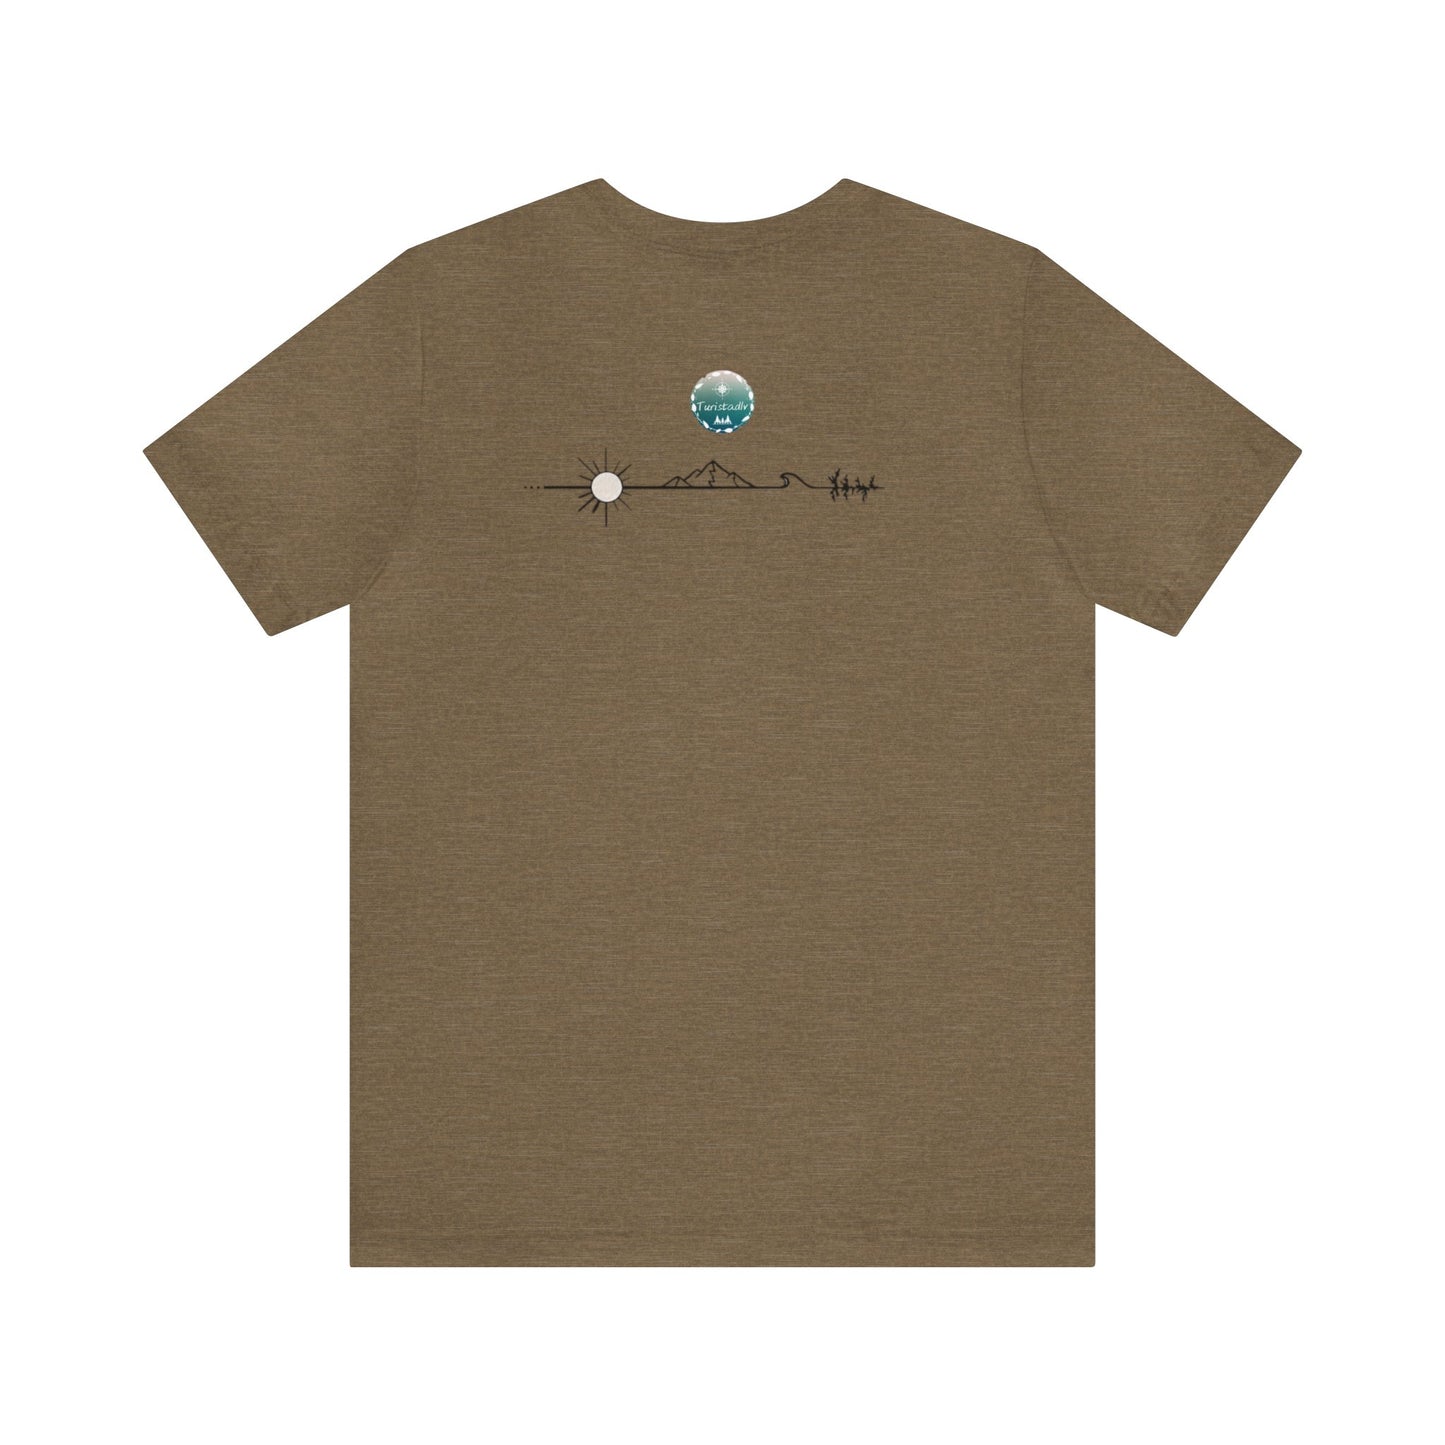 Camiseta de camping, camiseta de viajero, regalo de camping, camiseta de viaje, regalo de viaje, camiseta acampada, regalo de naturaleza